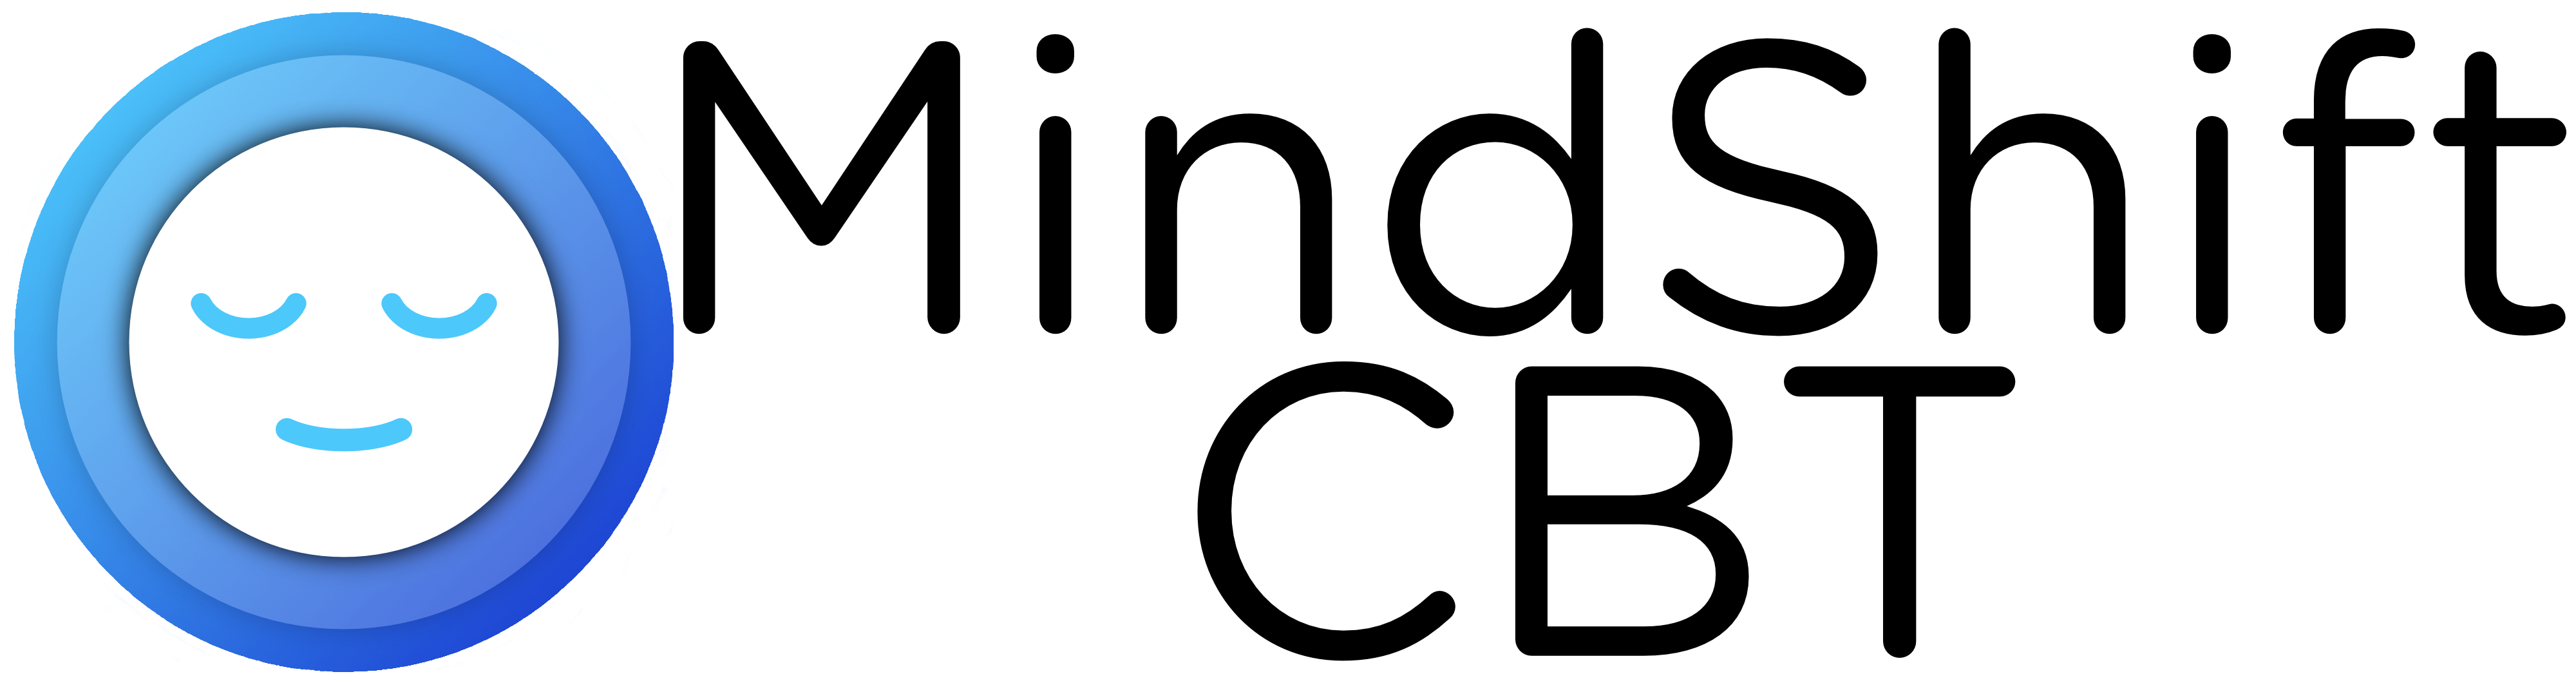 MindShift CBT logo horizontal black text circle